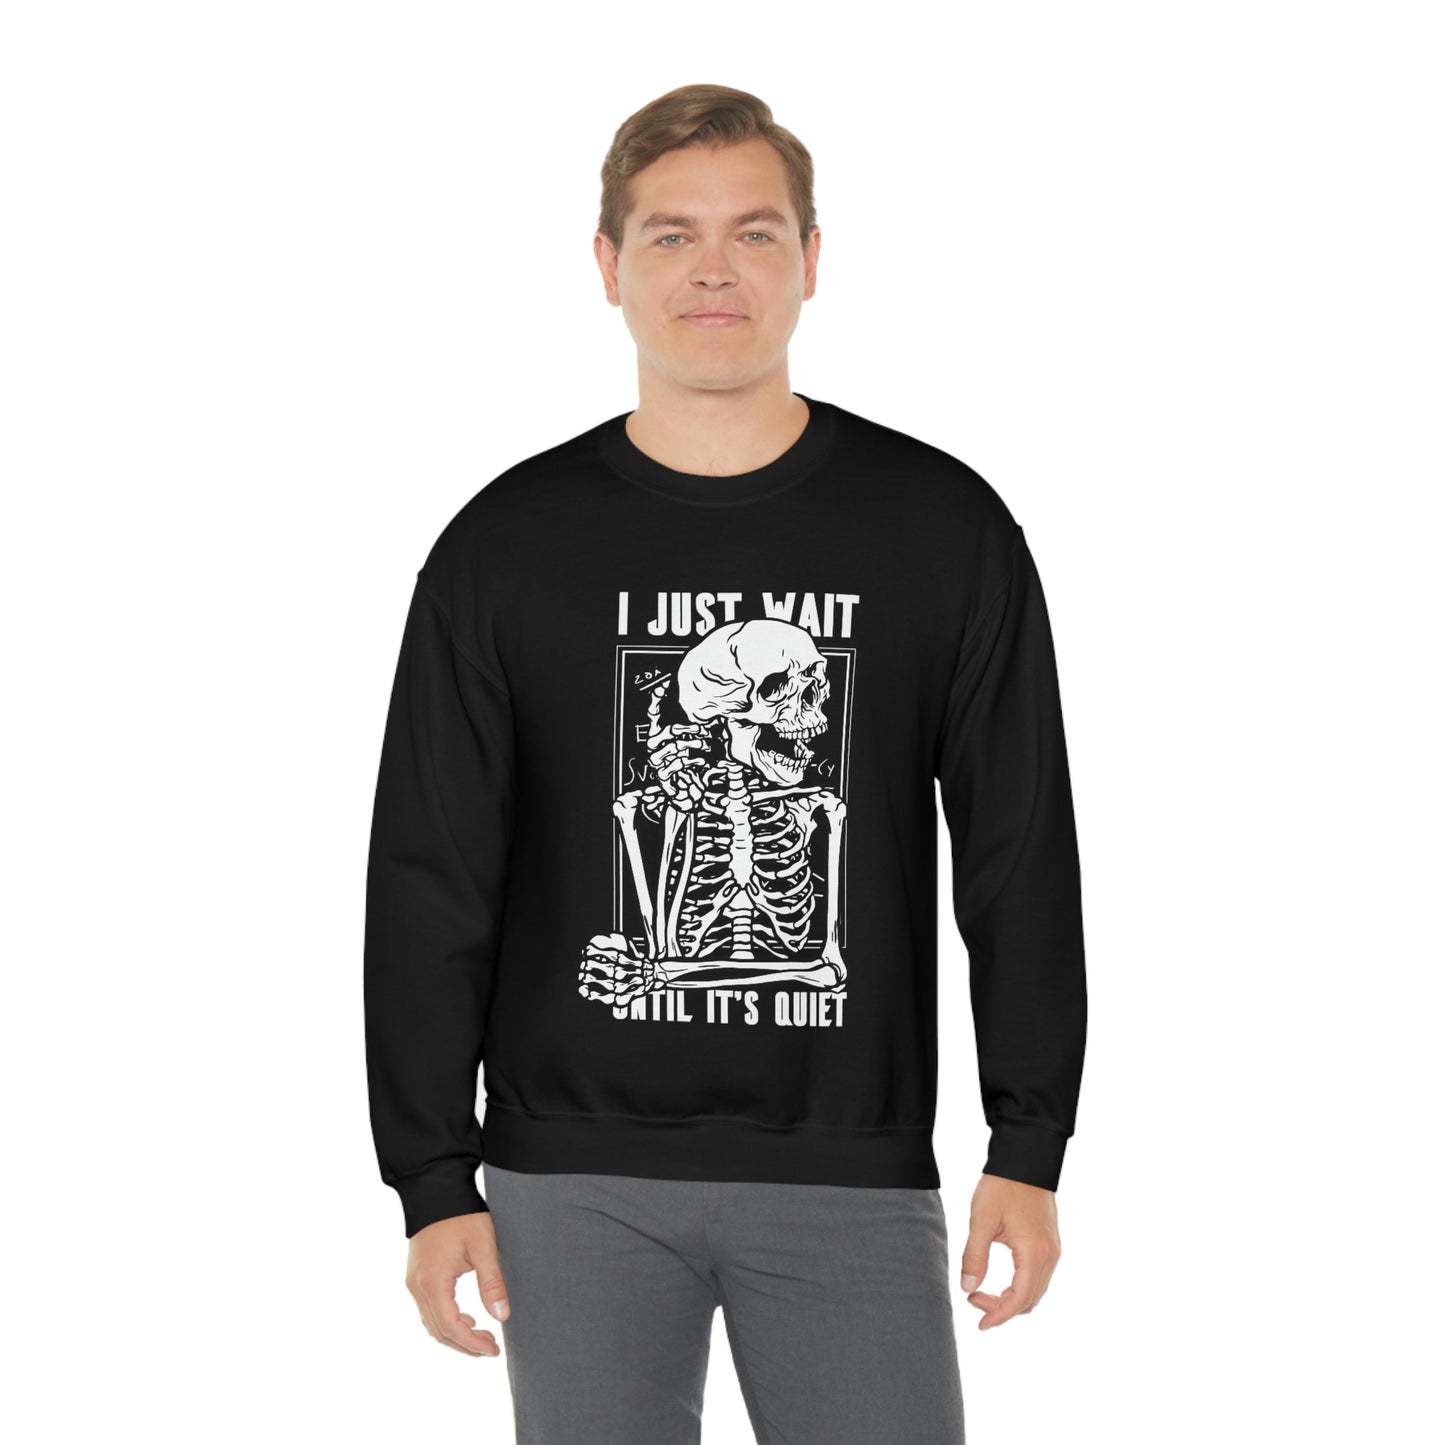 I Just Wait Until It's Quiet Skeleton Goth Aesthetic Sweatshirt